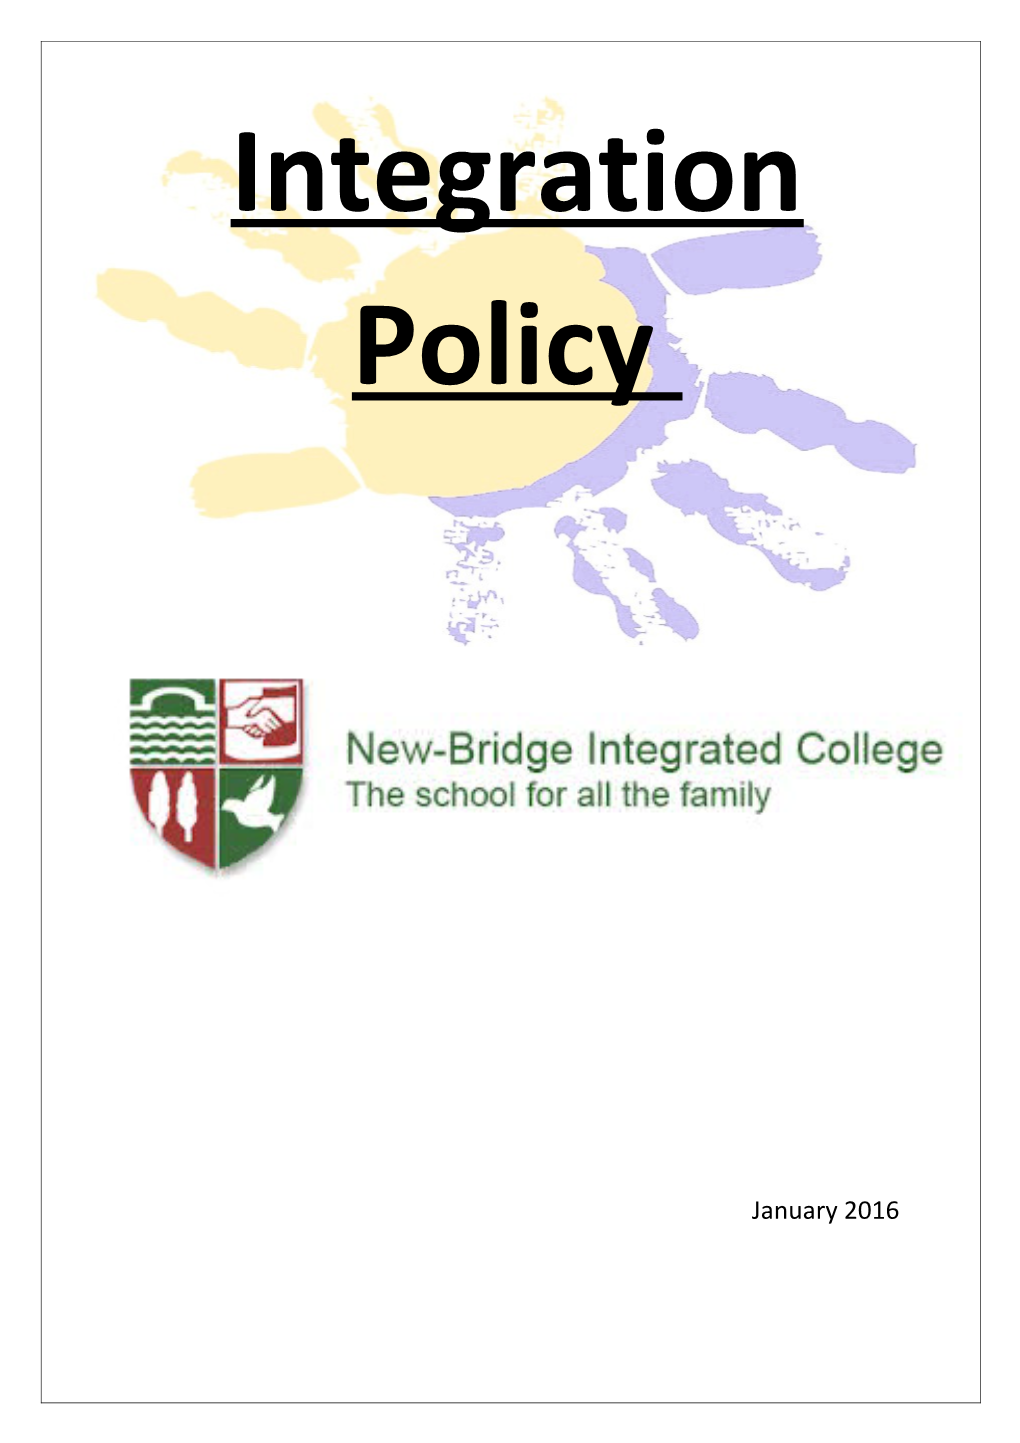 Integration Policy Framework